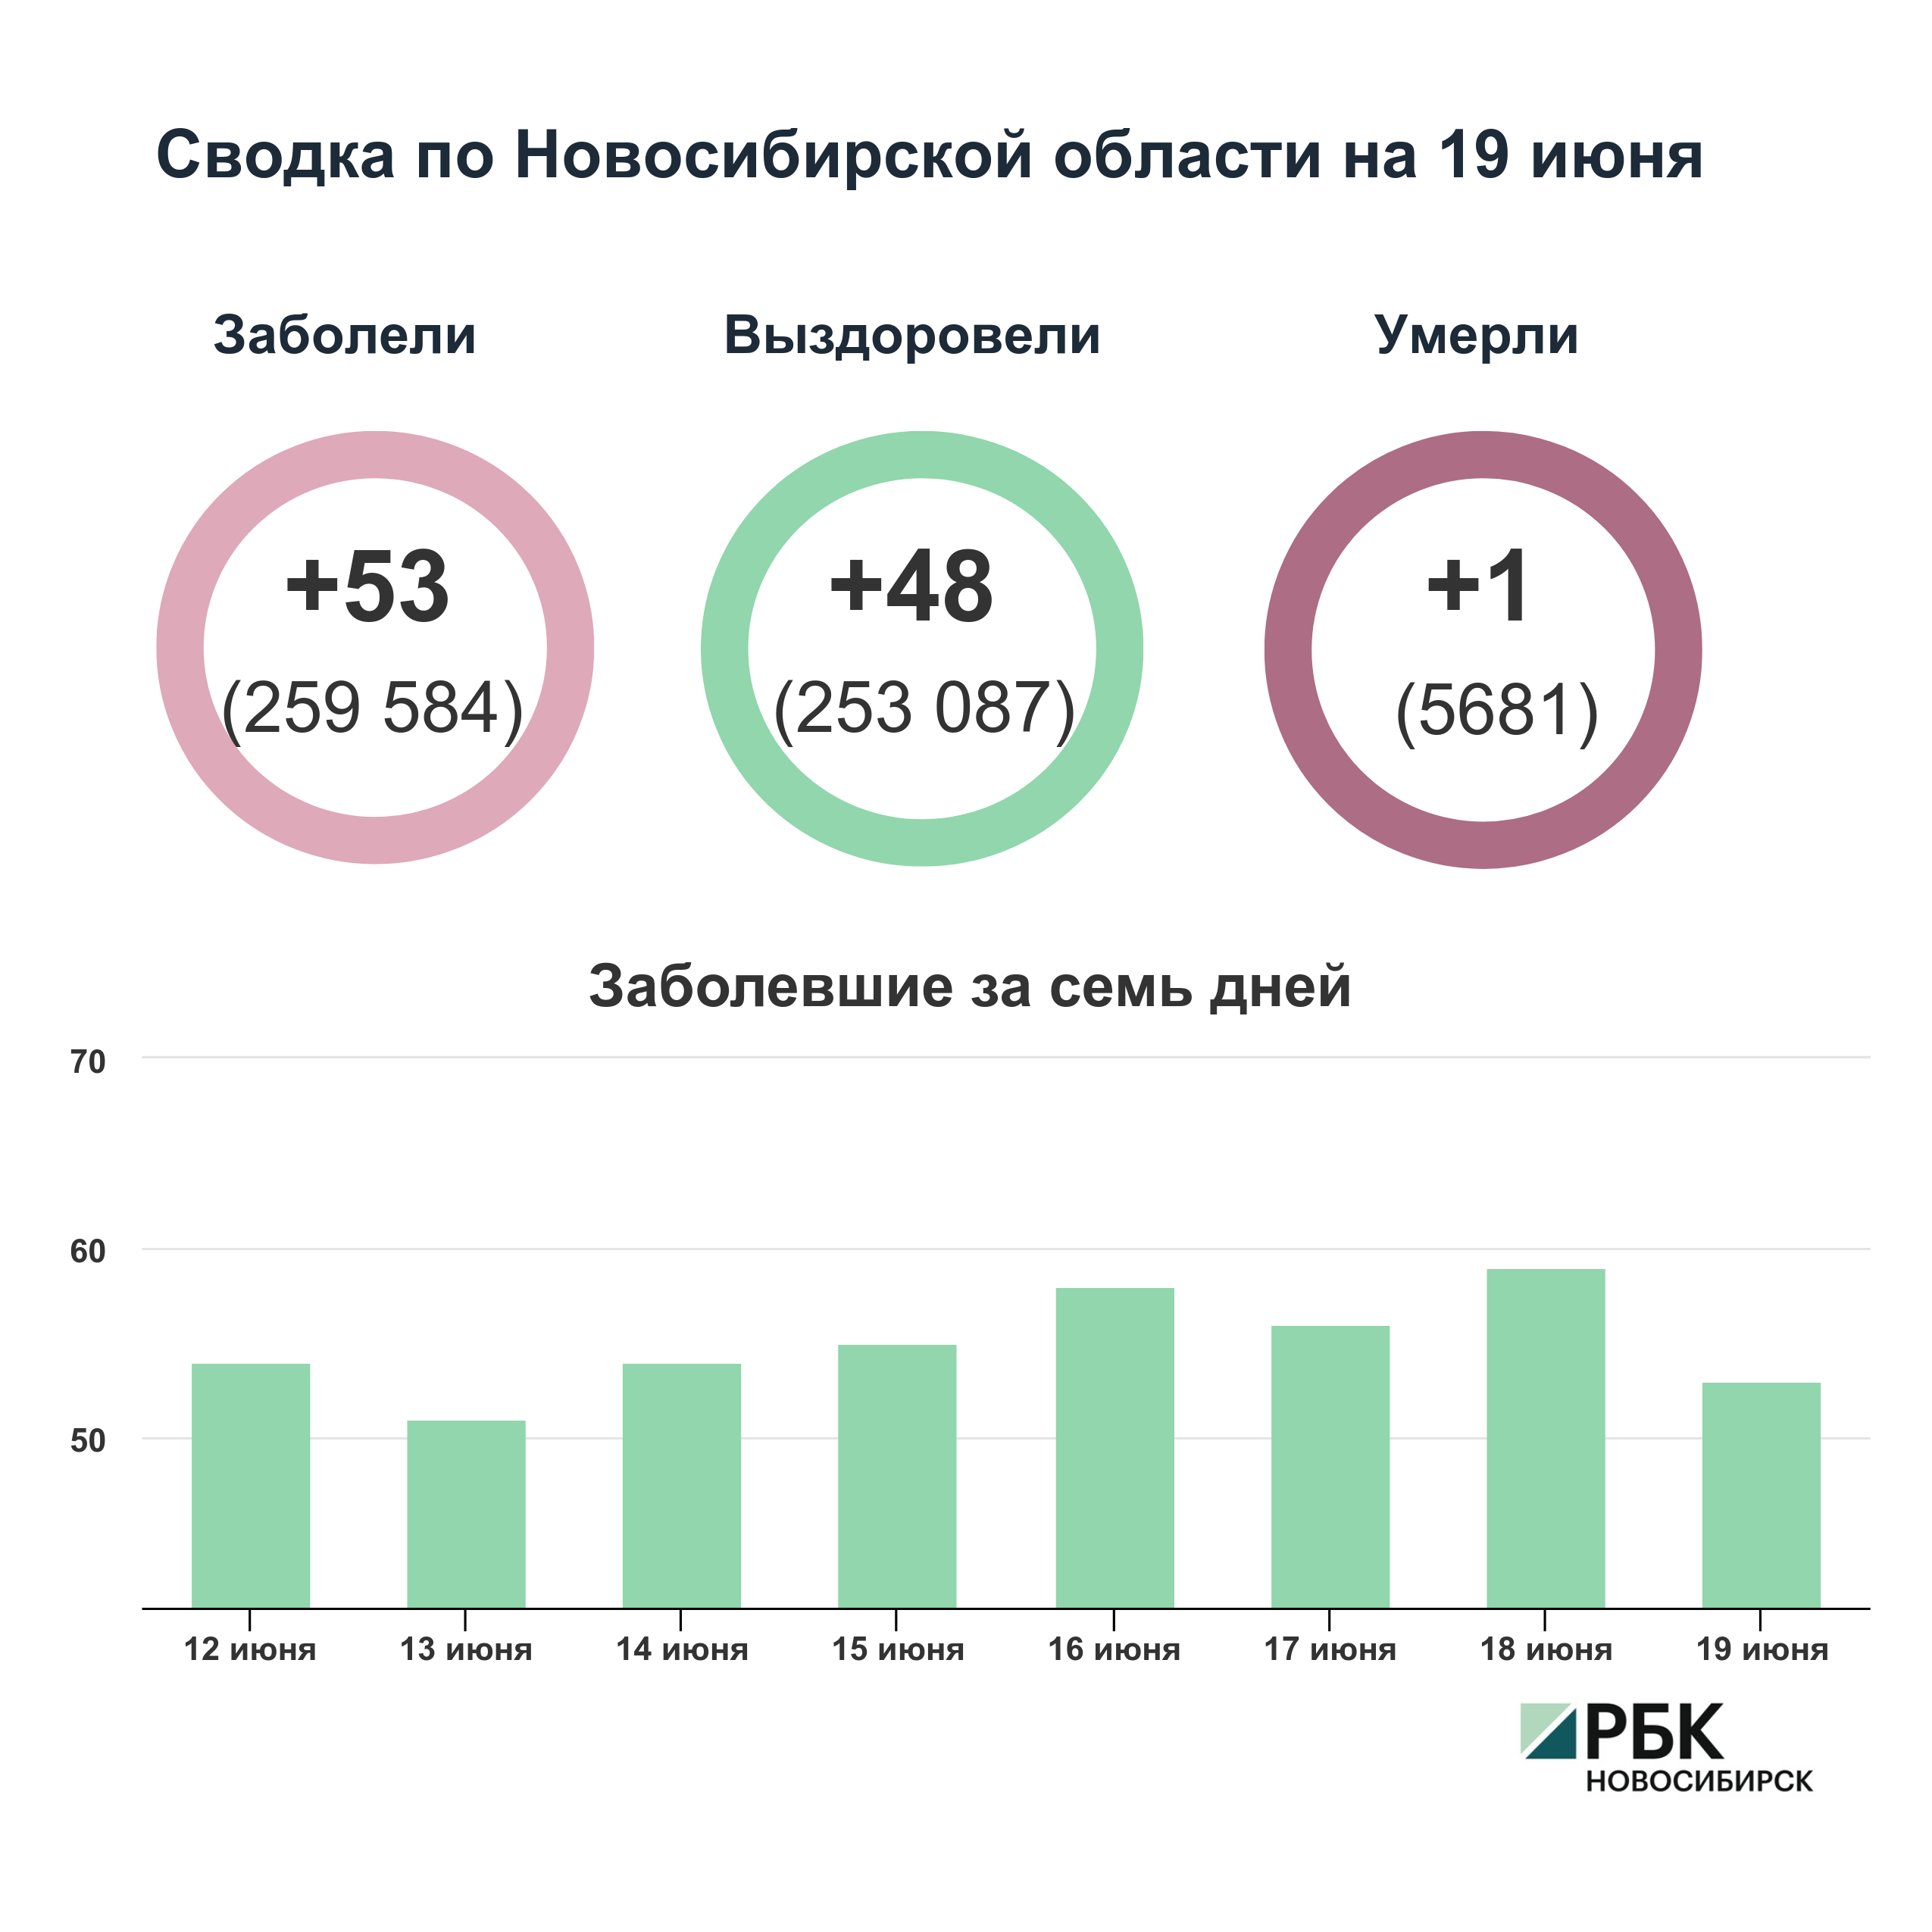 Коронавирус в Новосибирске: сводка на 19 июня